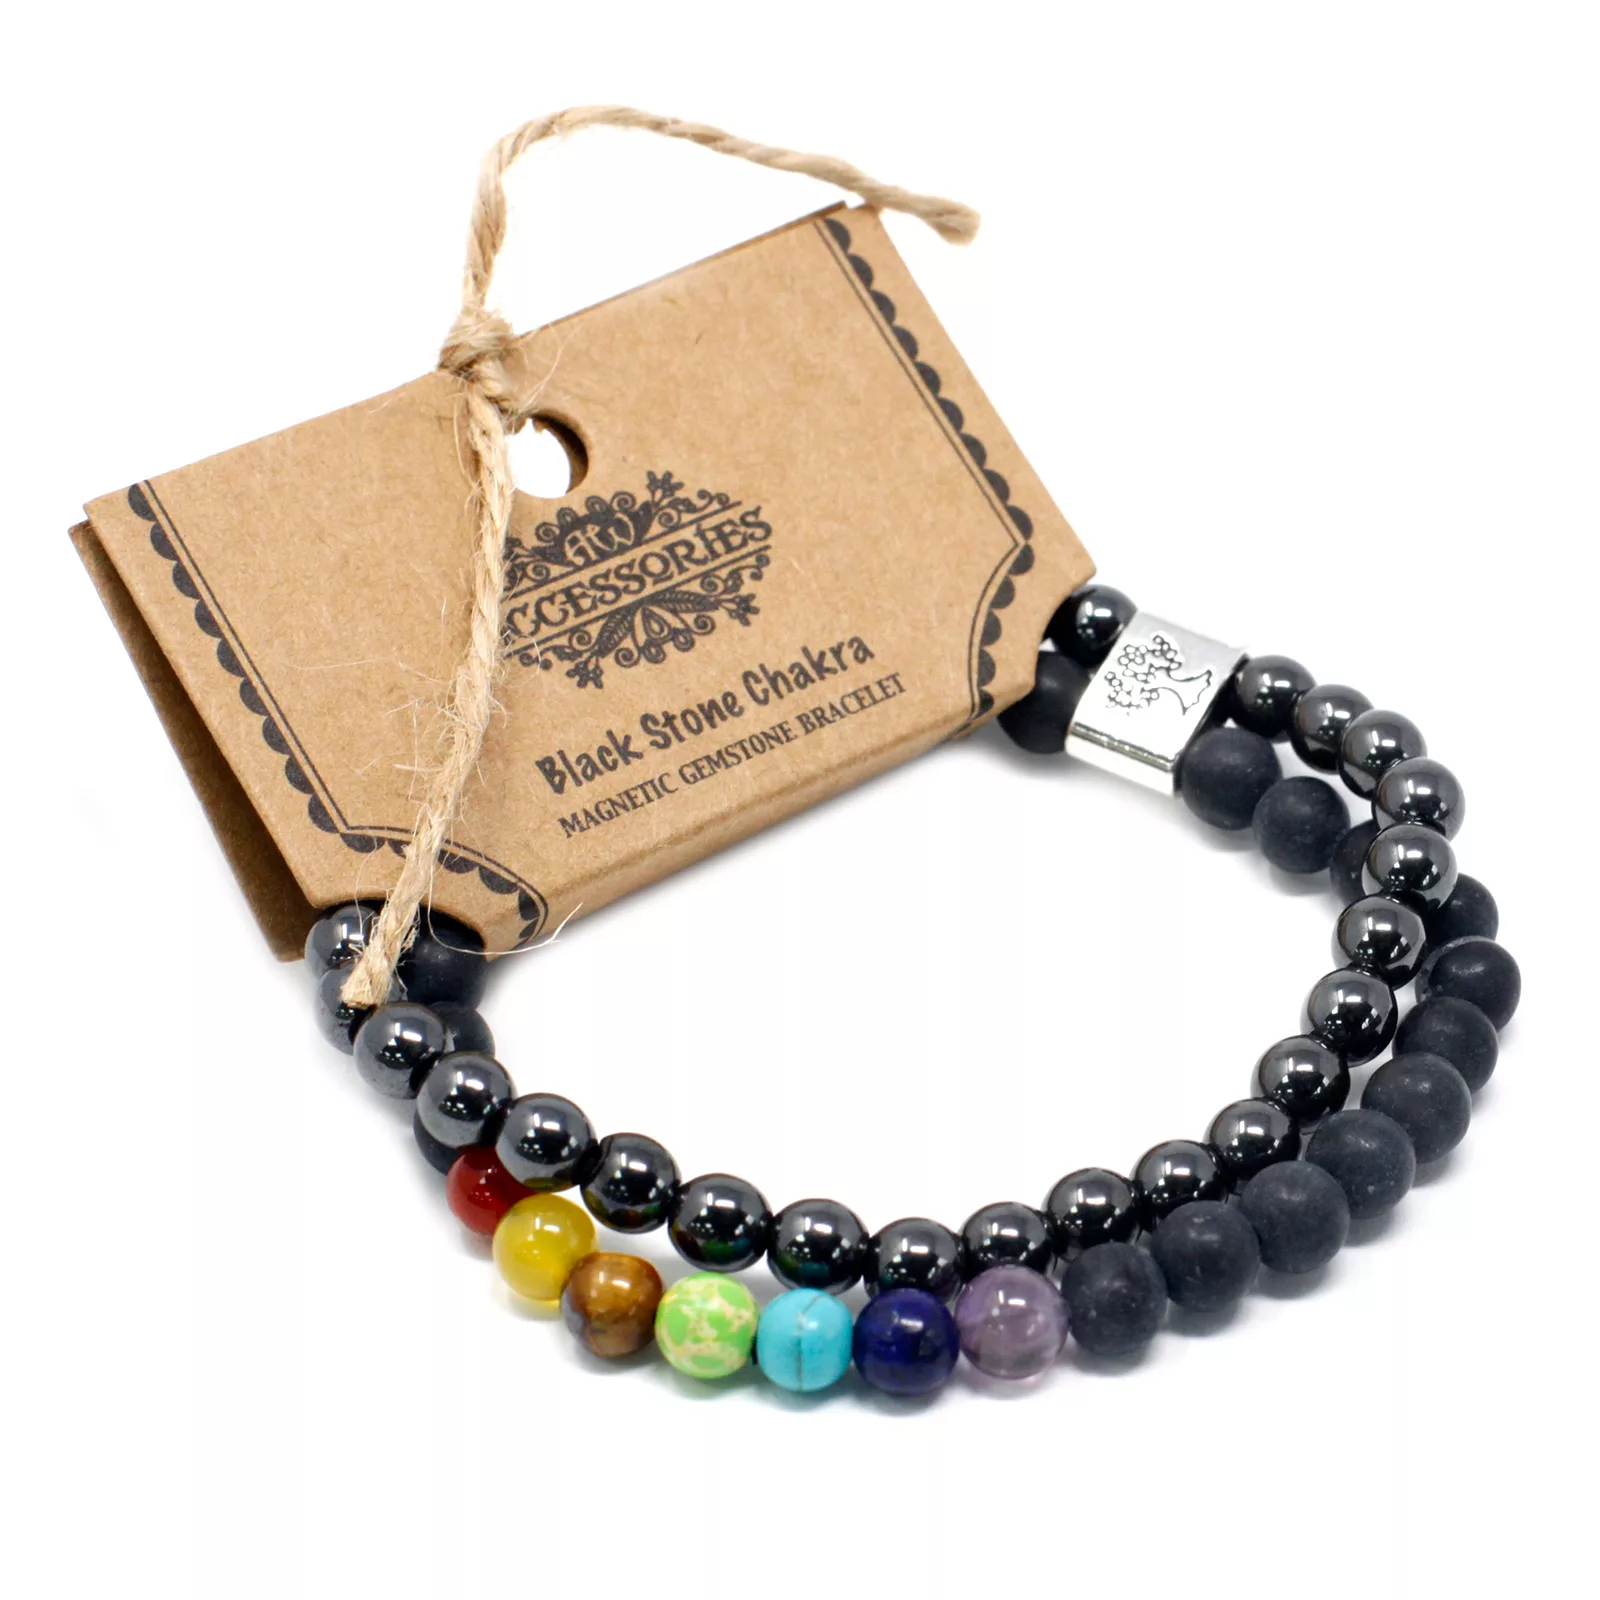 Magnetic Gemstone Bracelet – Black Stone Chakra